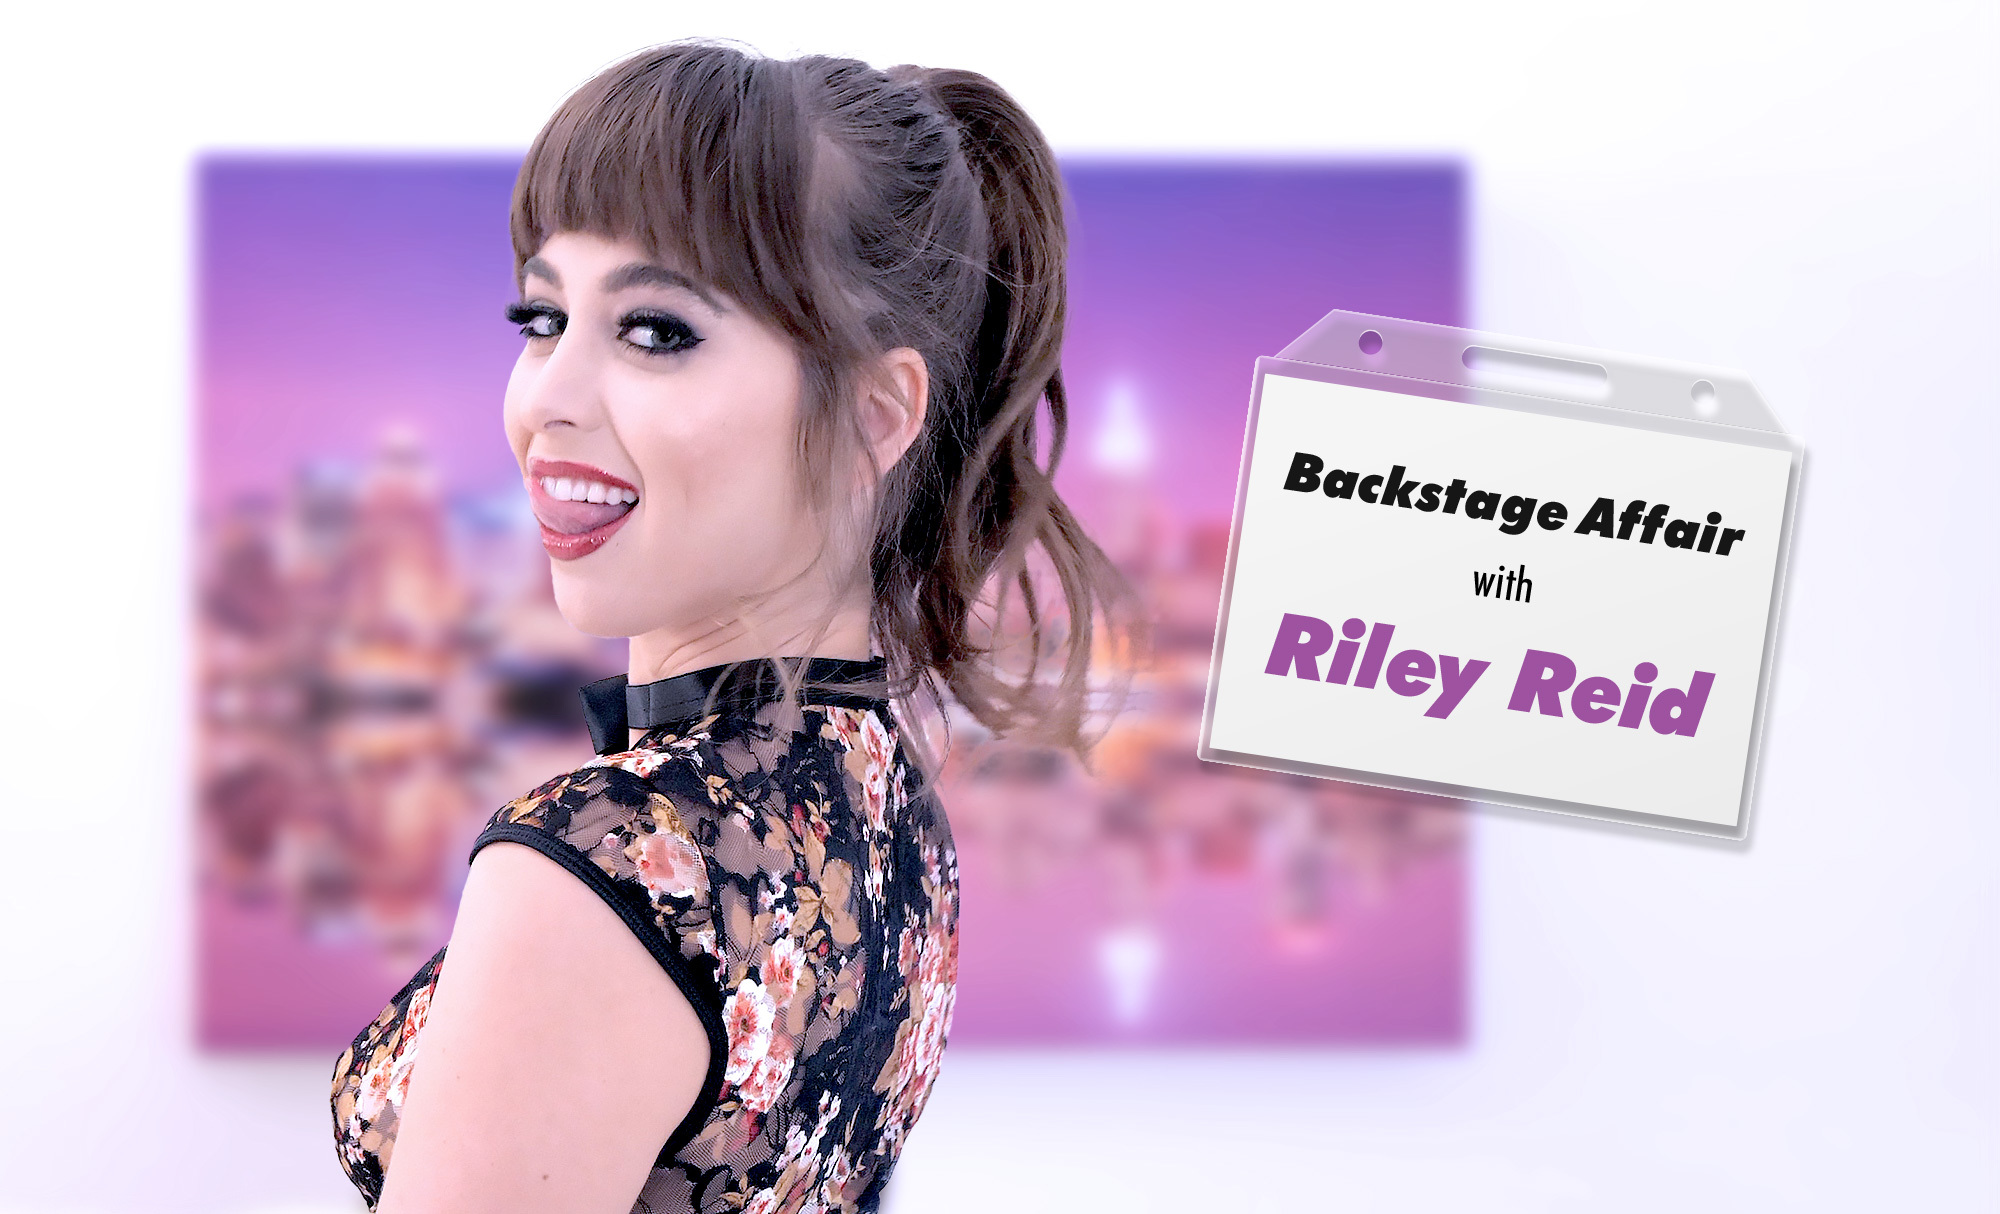 Riley reid backstage